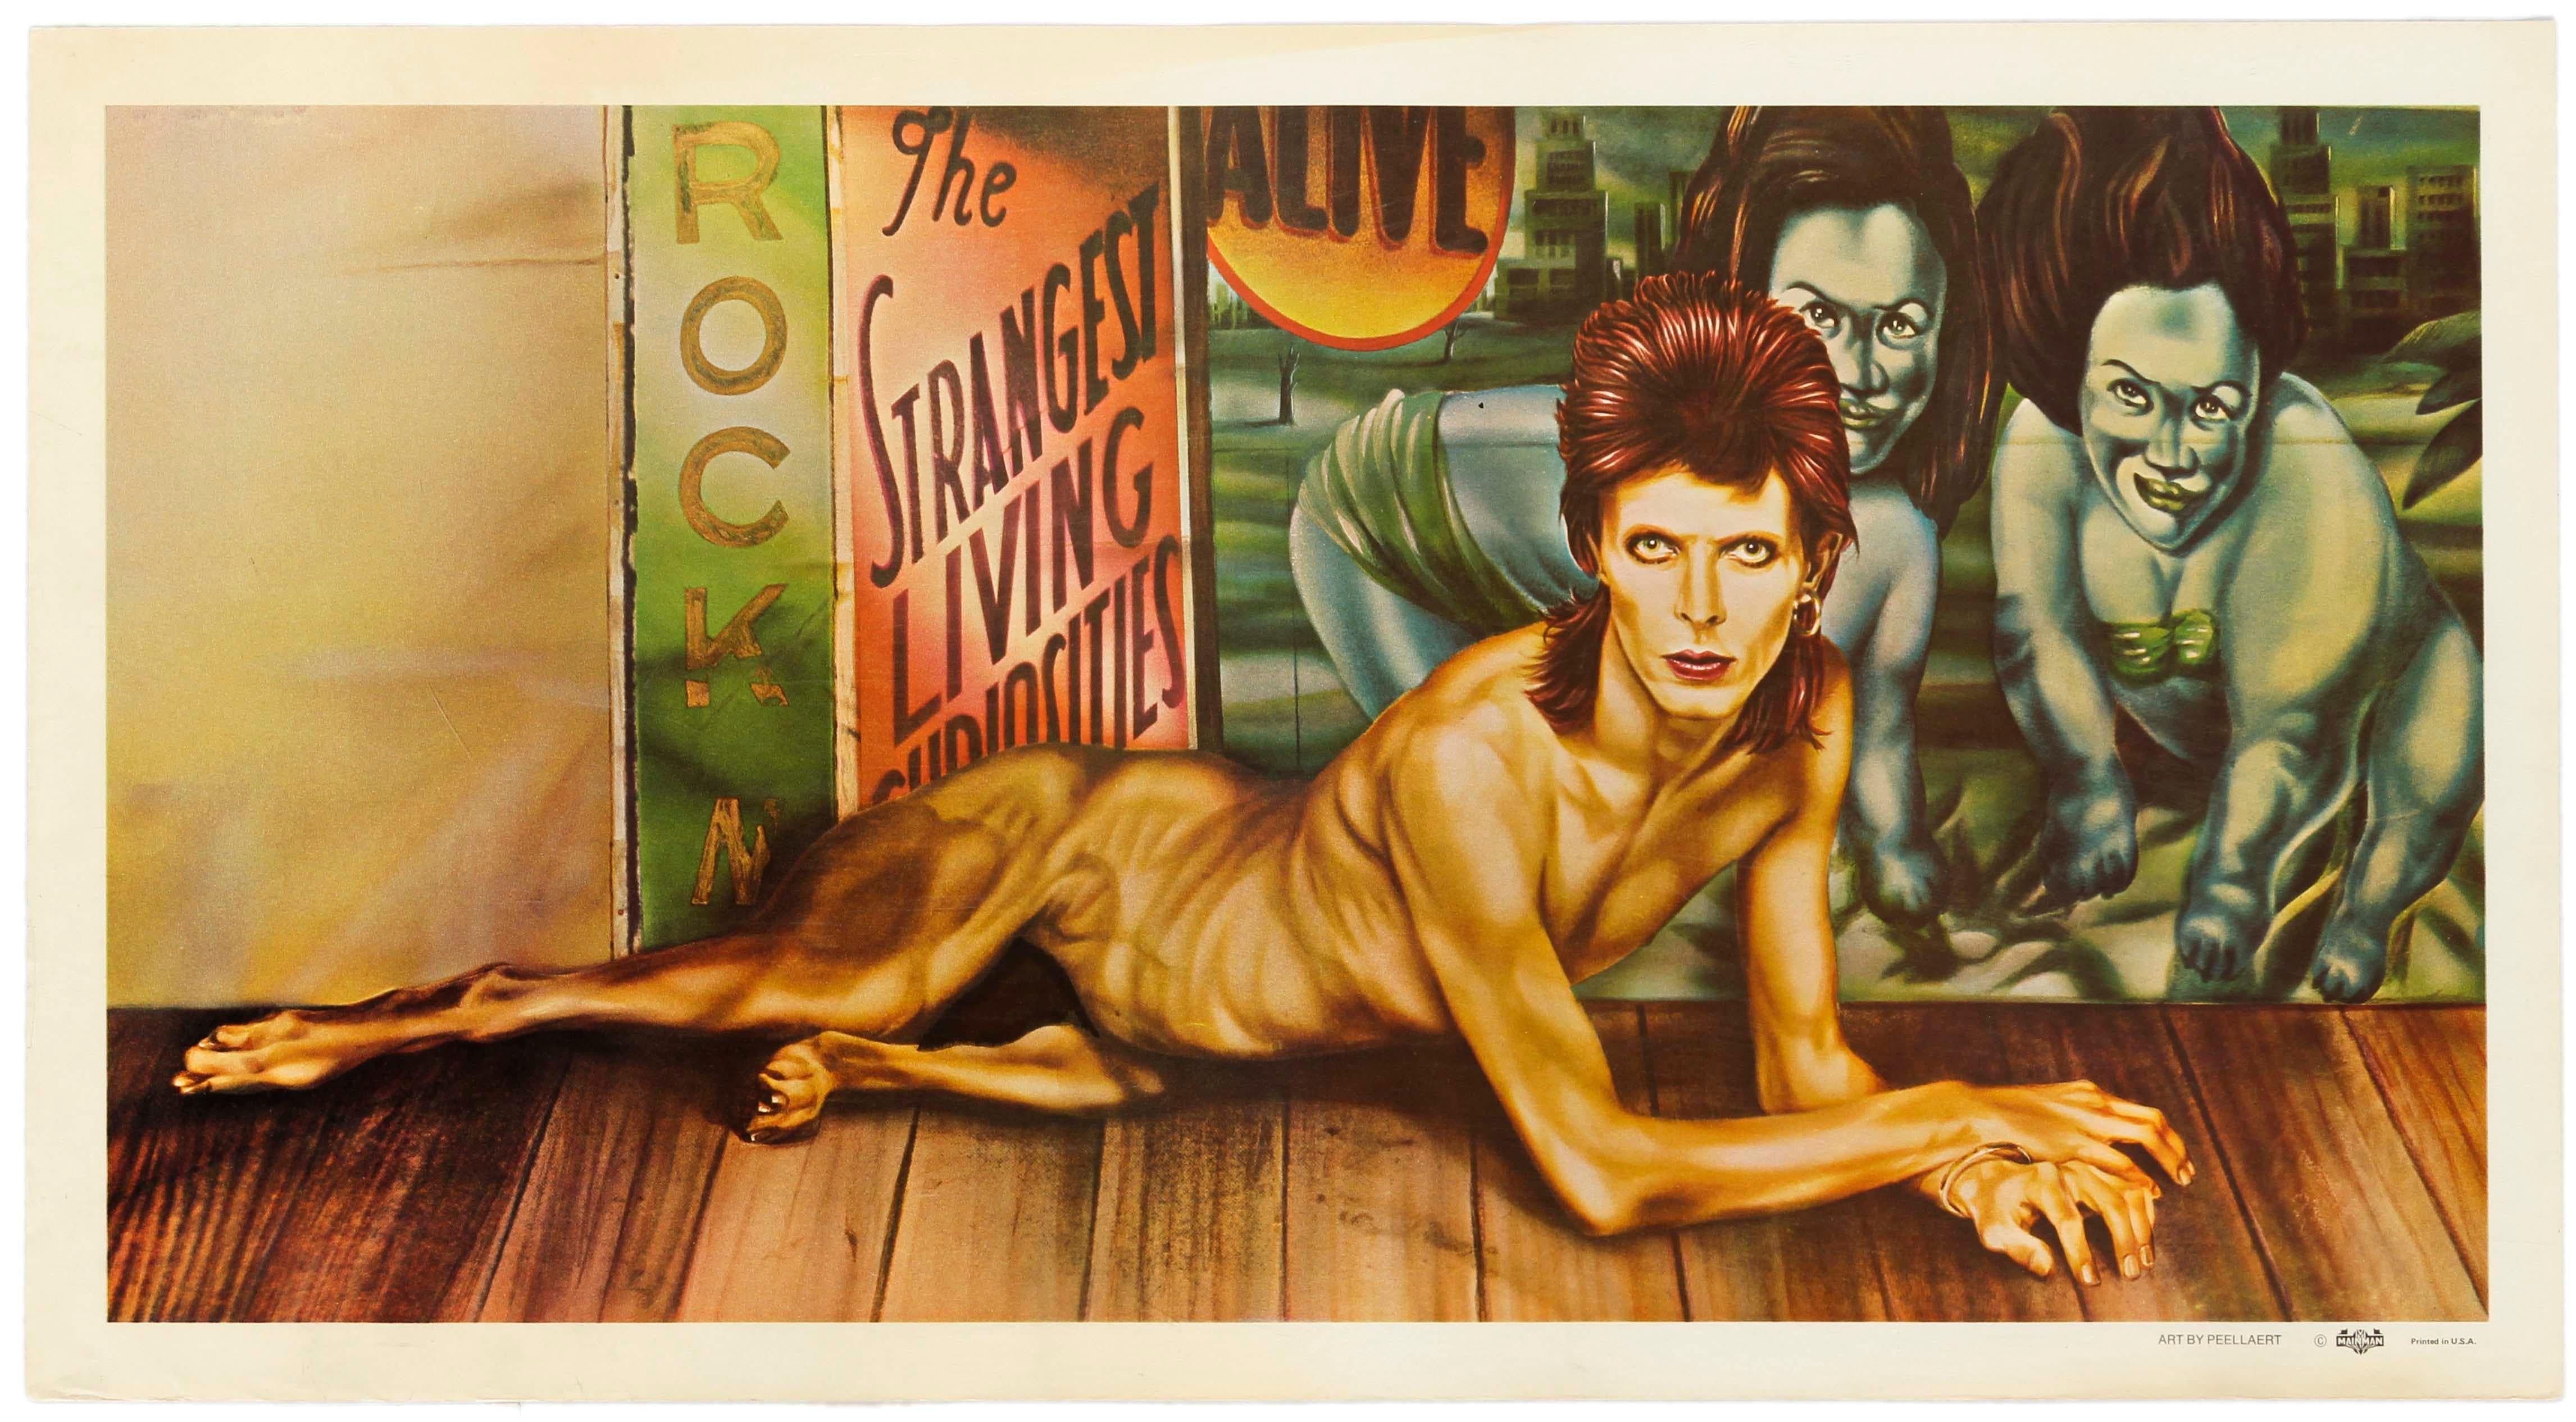 Guy Peellaert Print - Original Vintage Poster David Bowie Diamond Dogs Iconic Rock Music Album Design 